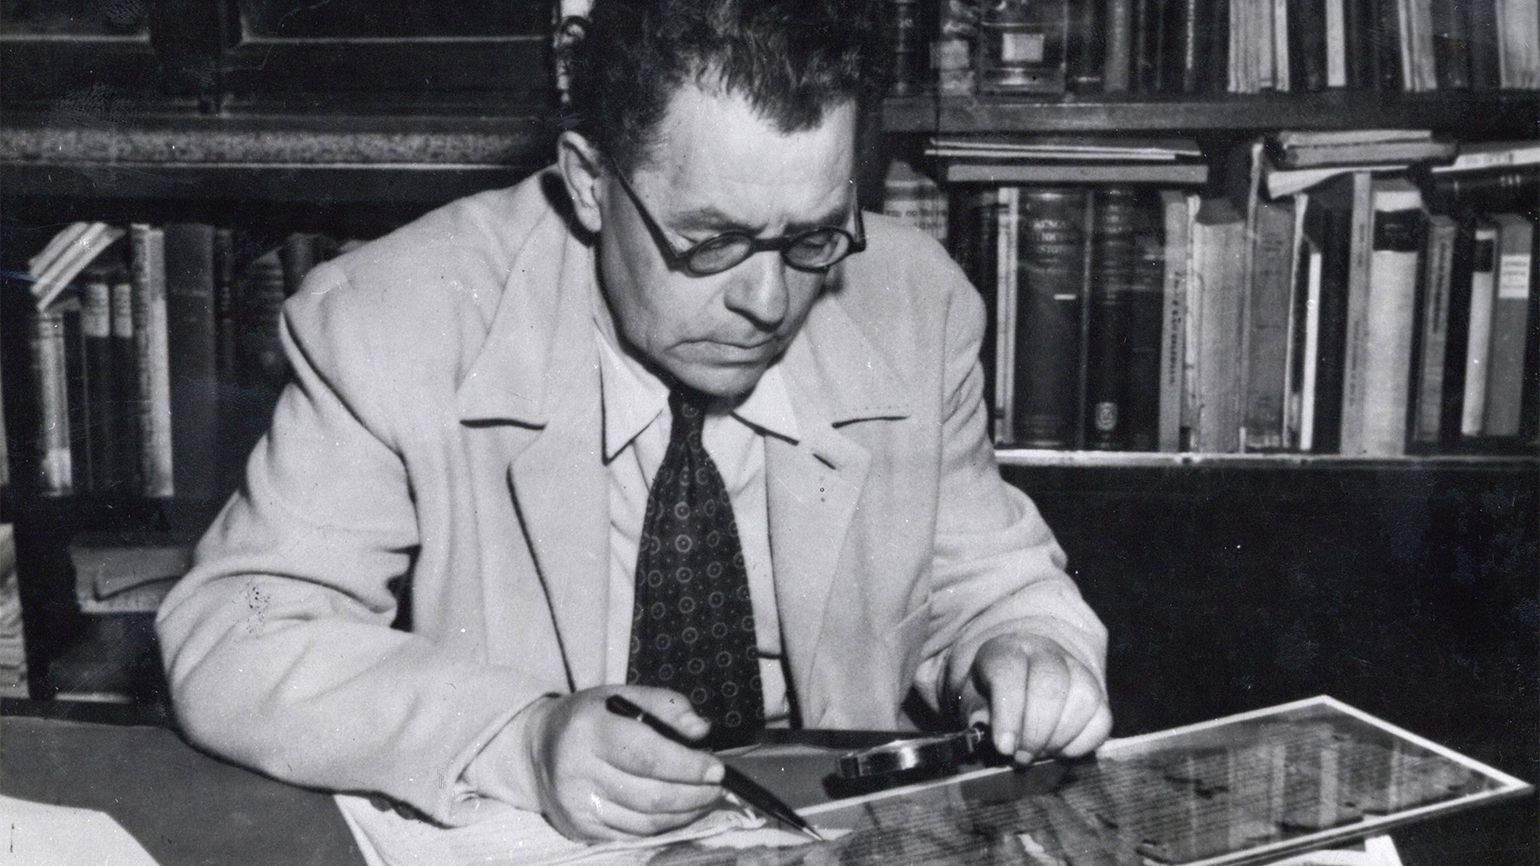 Scholar Eleazar Sukenik examining one of the Dead Sea Scrolls in 1951